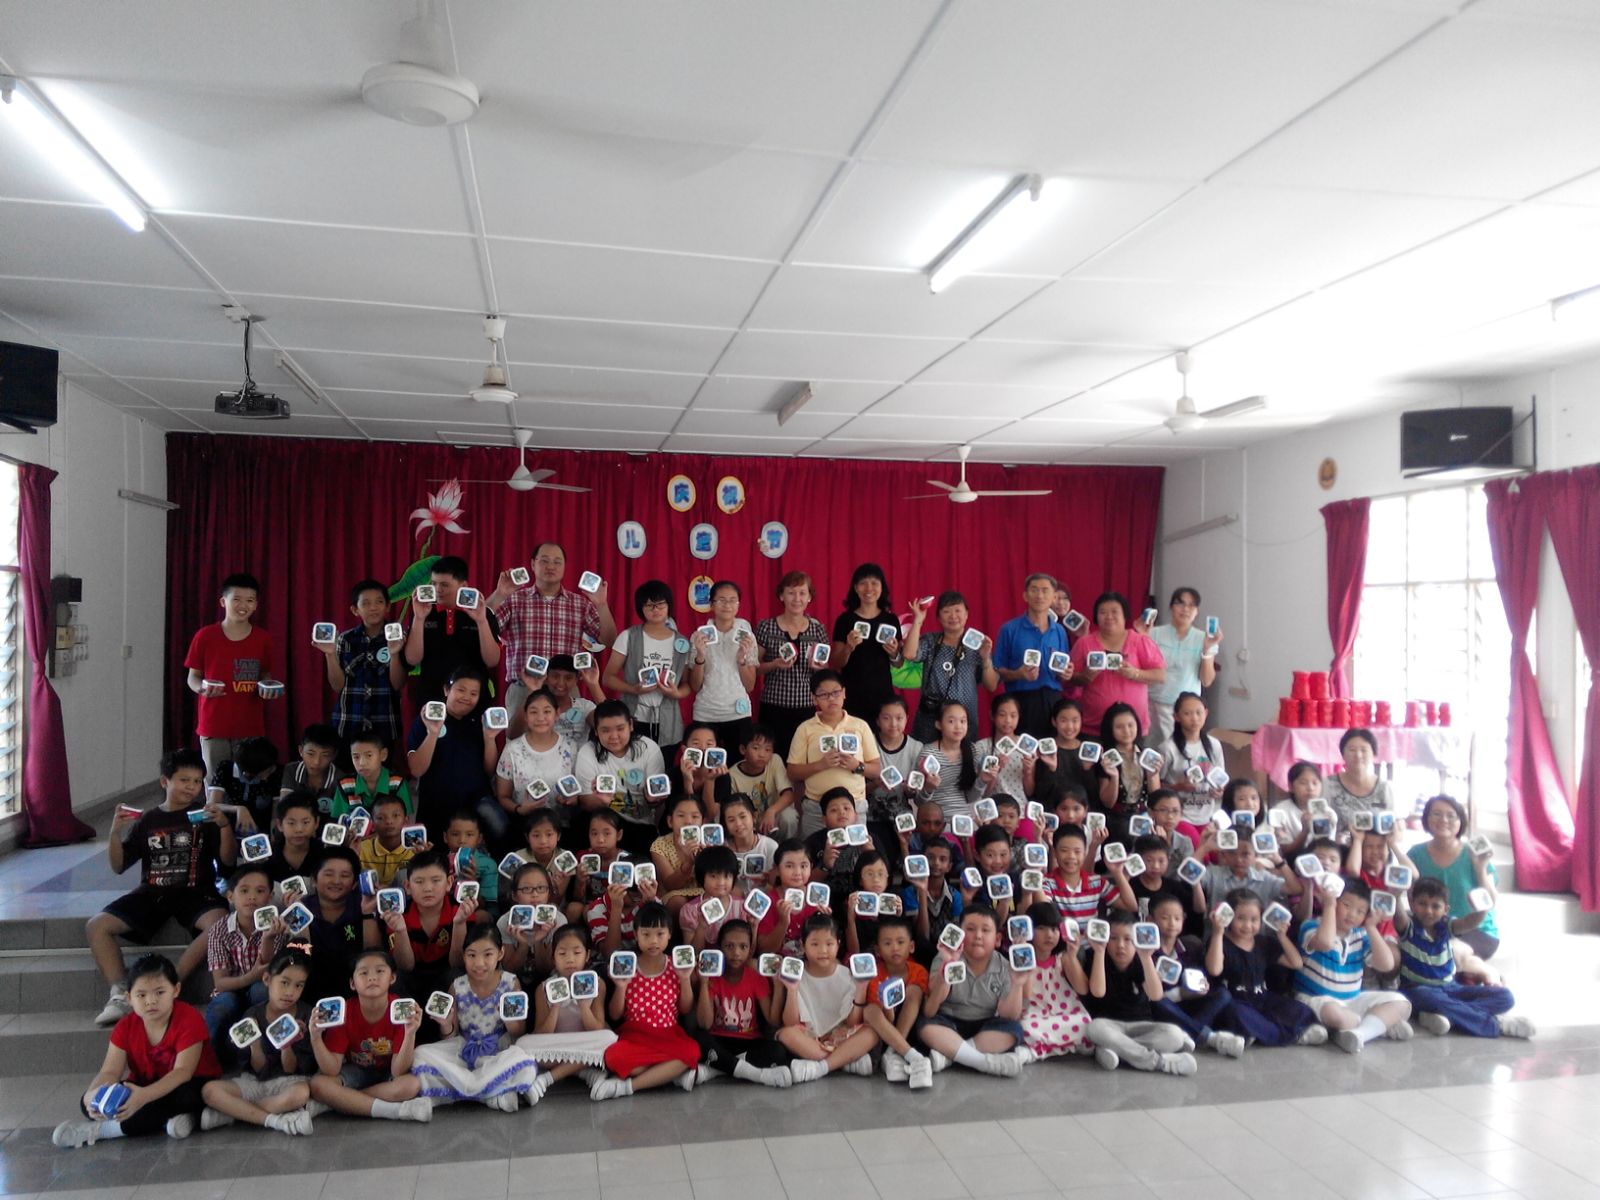 SJKC Kok Ming Children's day 2015